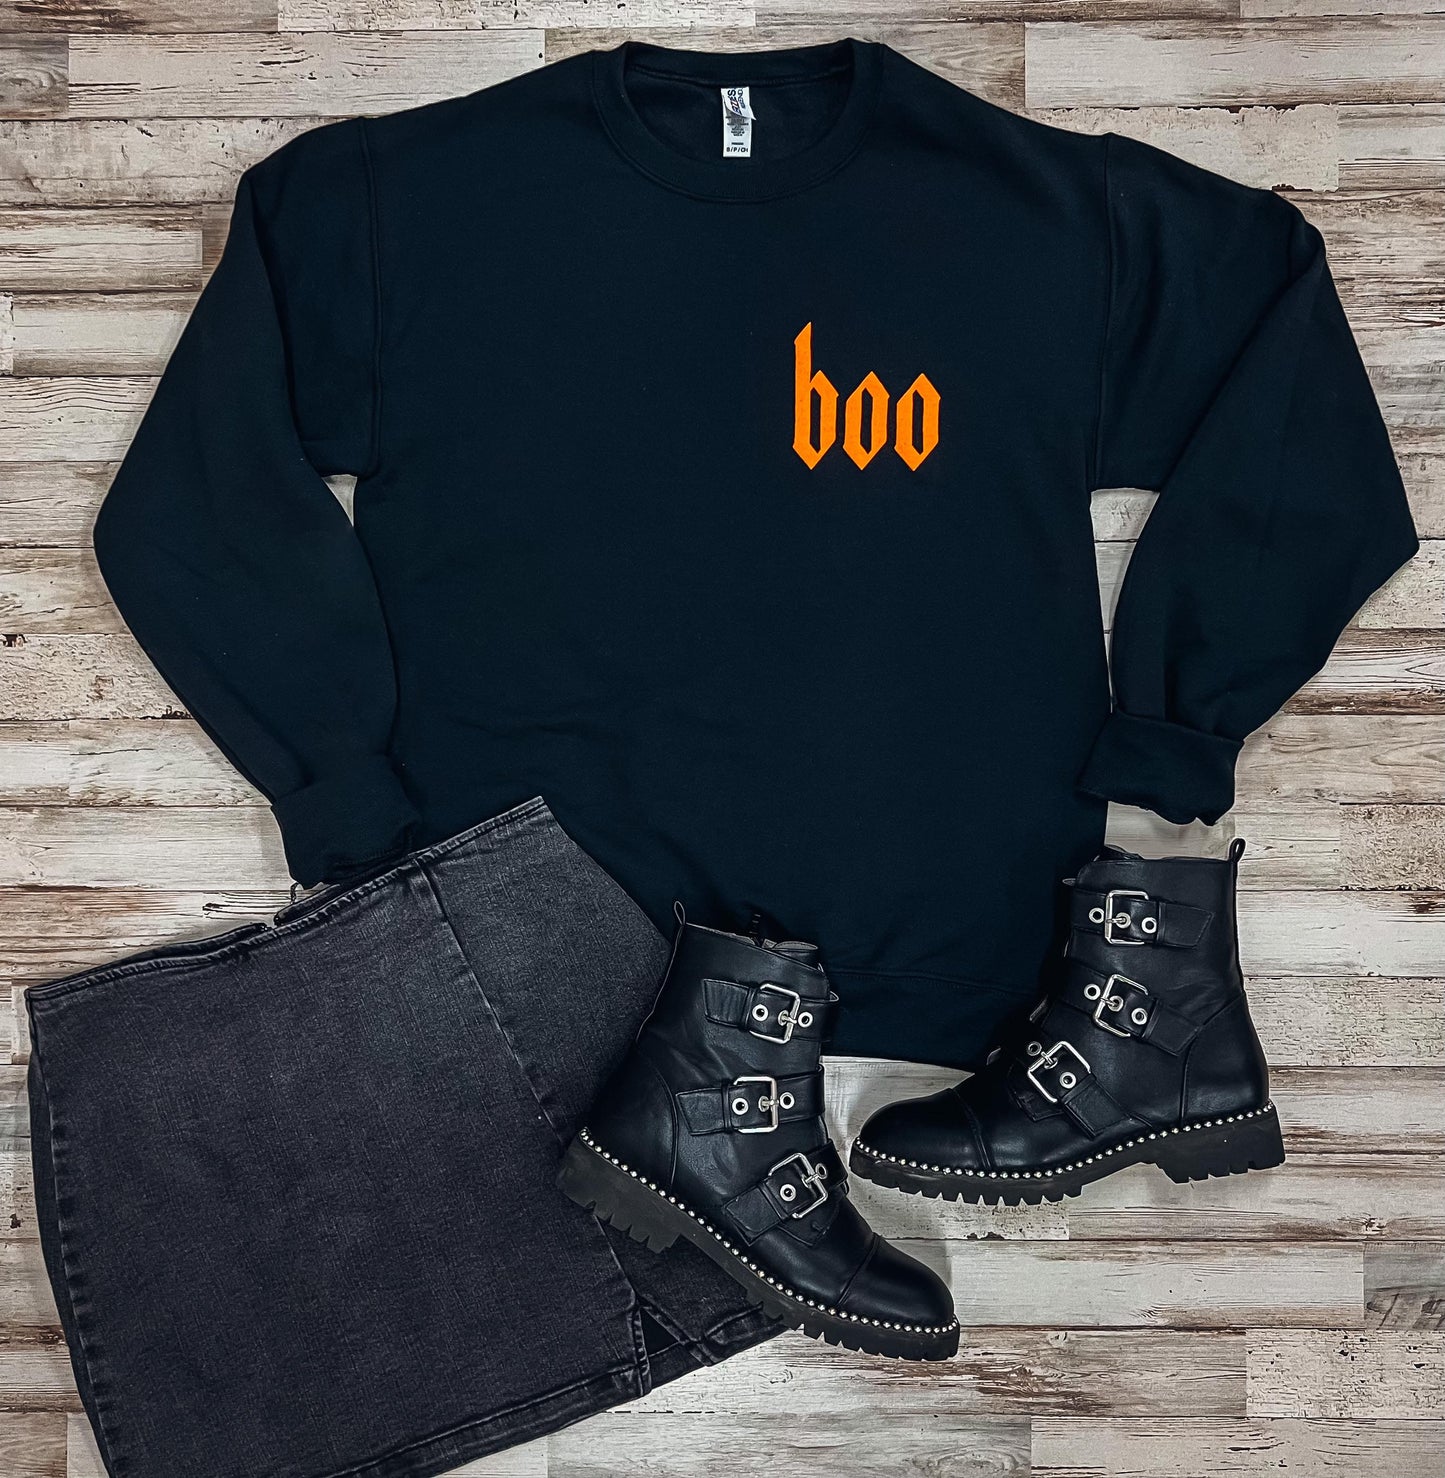 Boo (Orange Puff Ink) Black Sweatshirt preorder